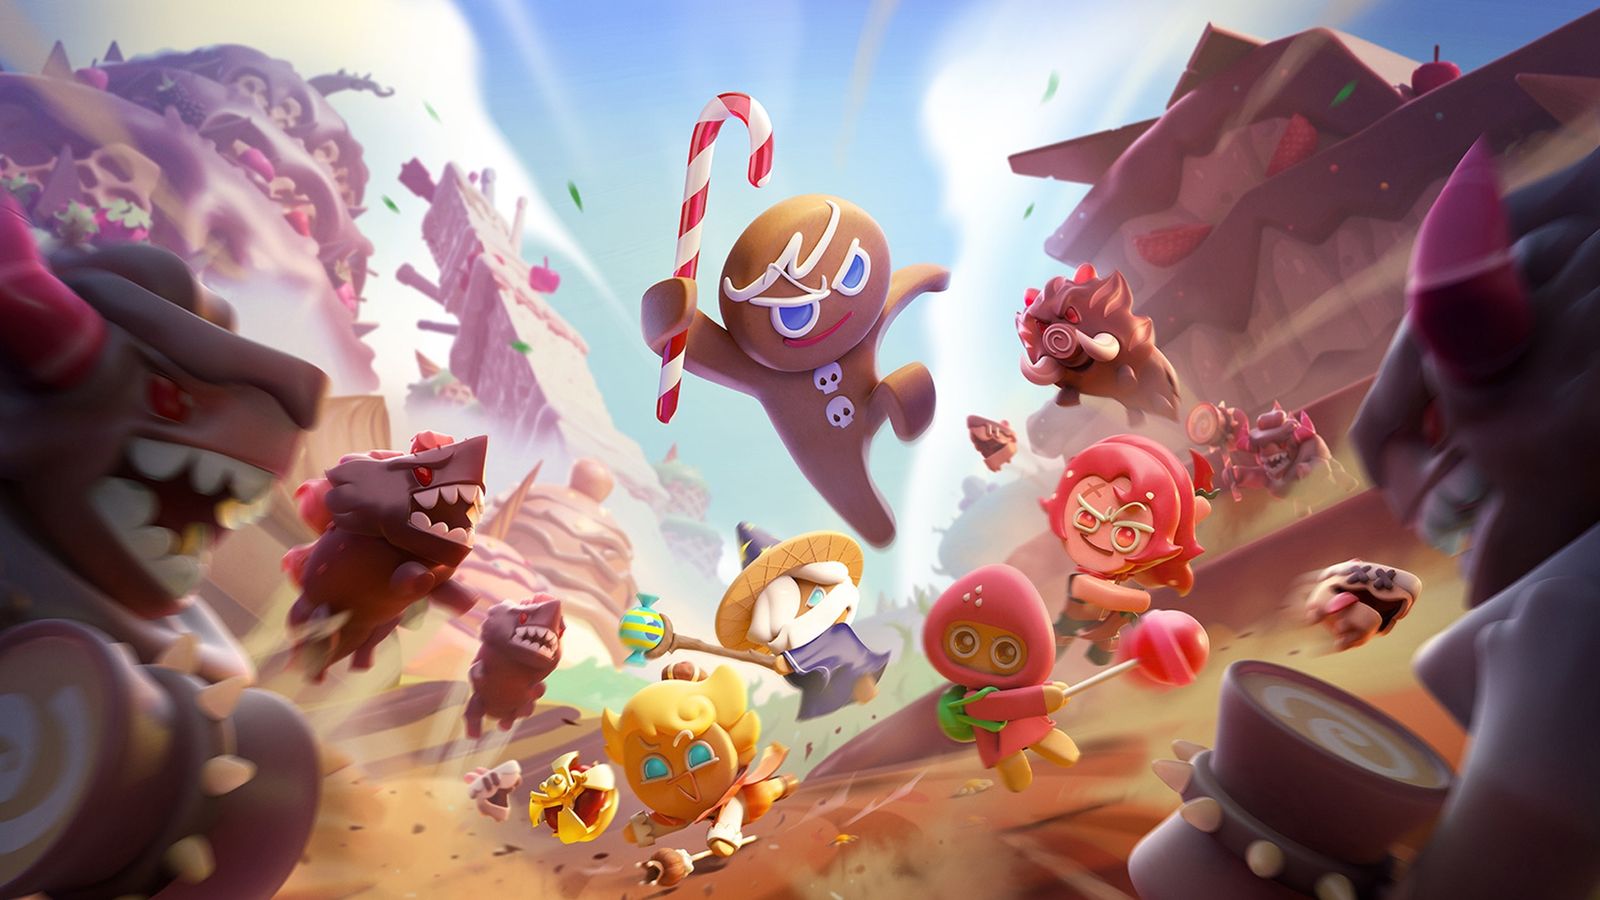 Screenshot from Cookie Run: Kingdom, showing the lead cookie fighting against enemies